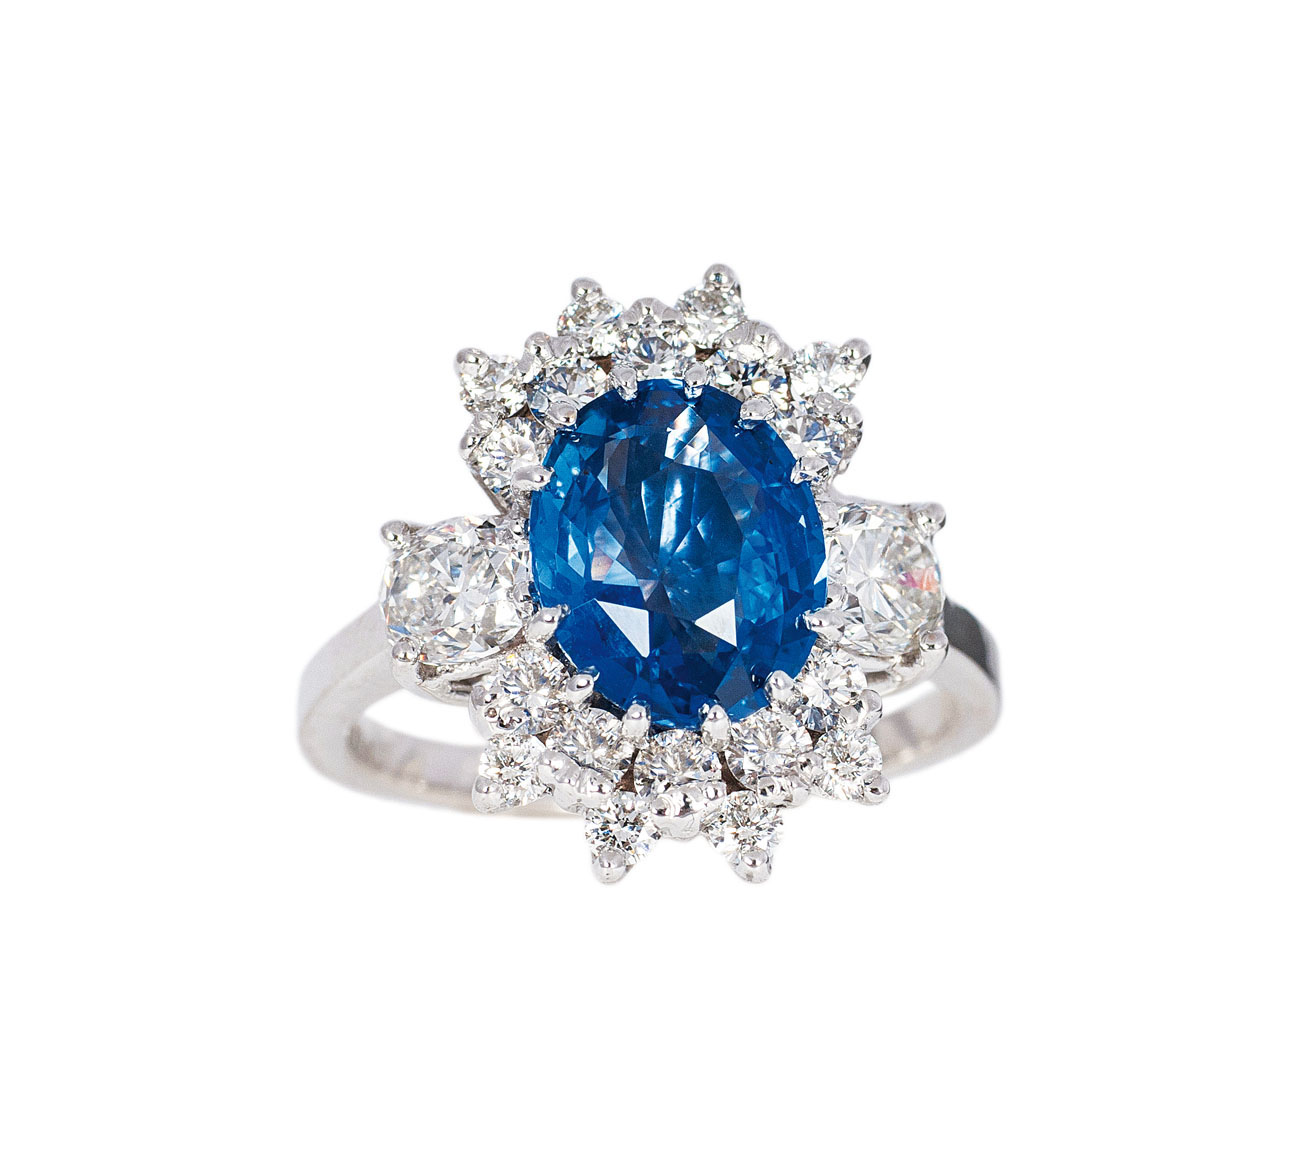 A very fine sapphire diamond ring